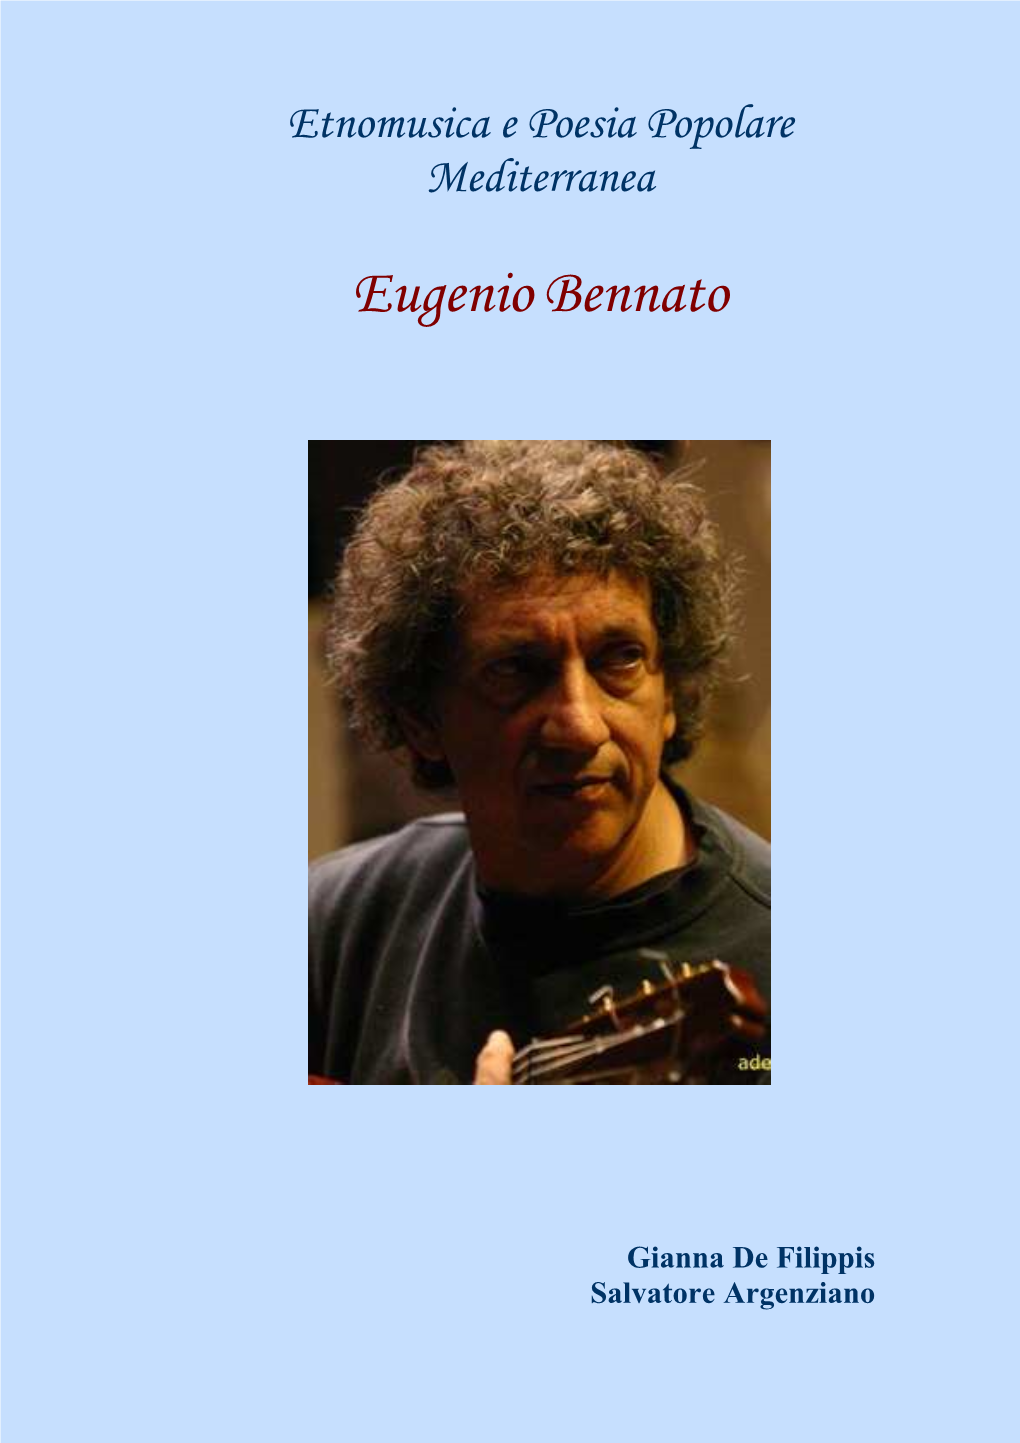 01.Eugenio Bennato